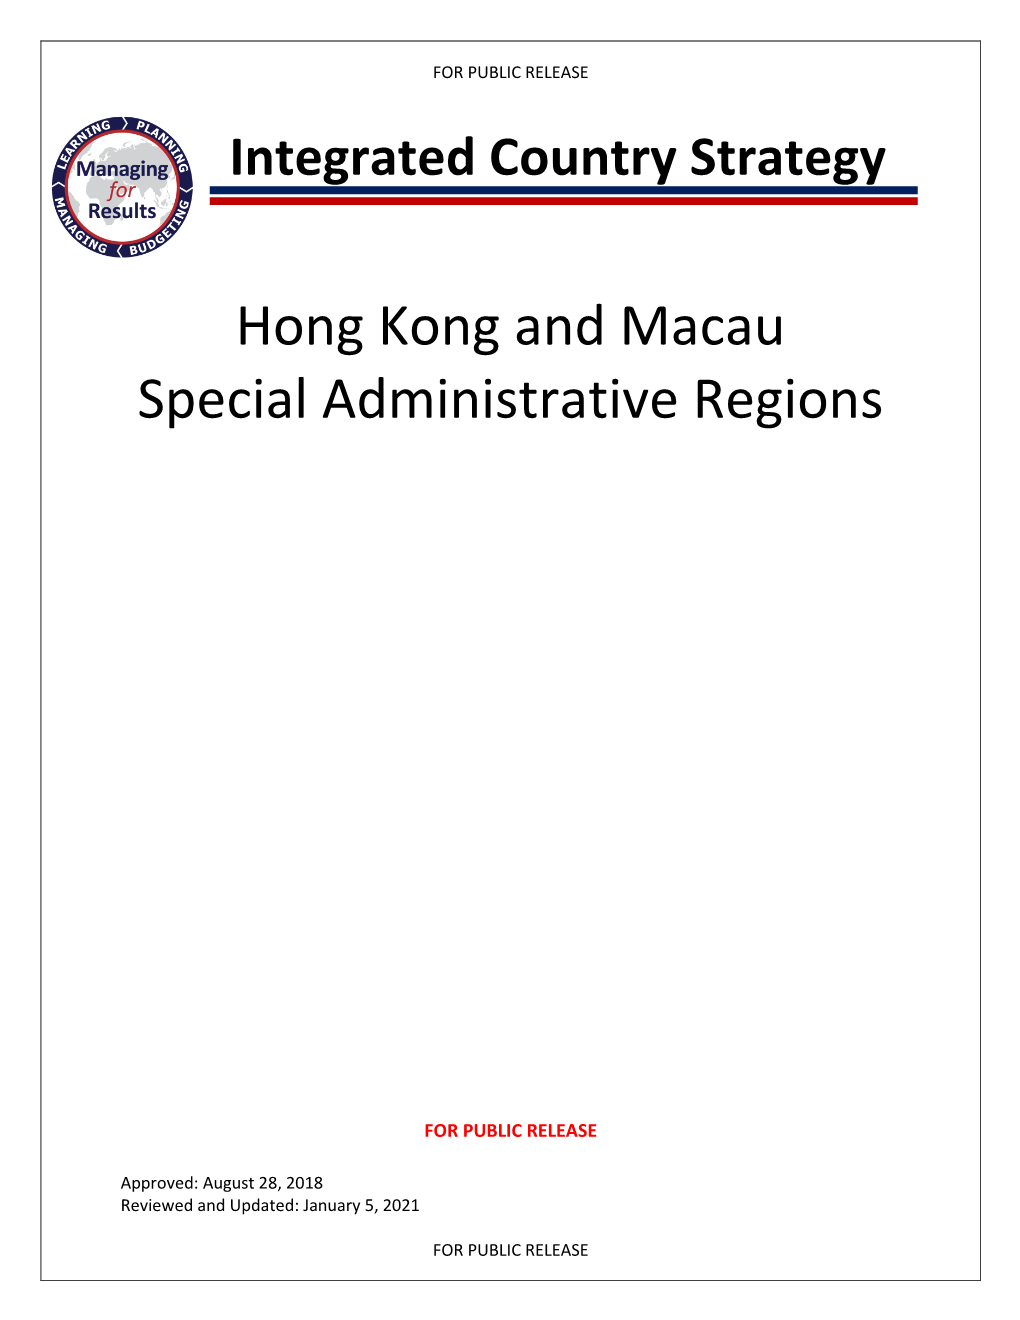 Hong Kong and Macau Special Administrative Regions